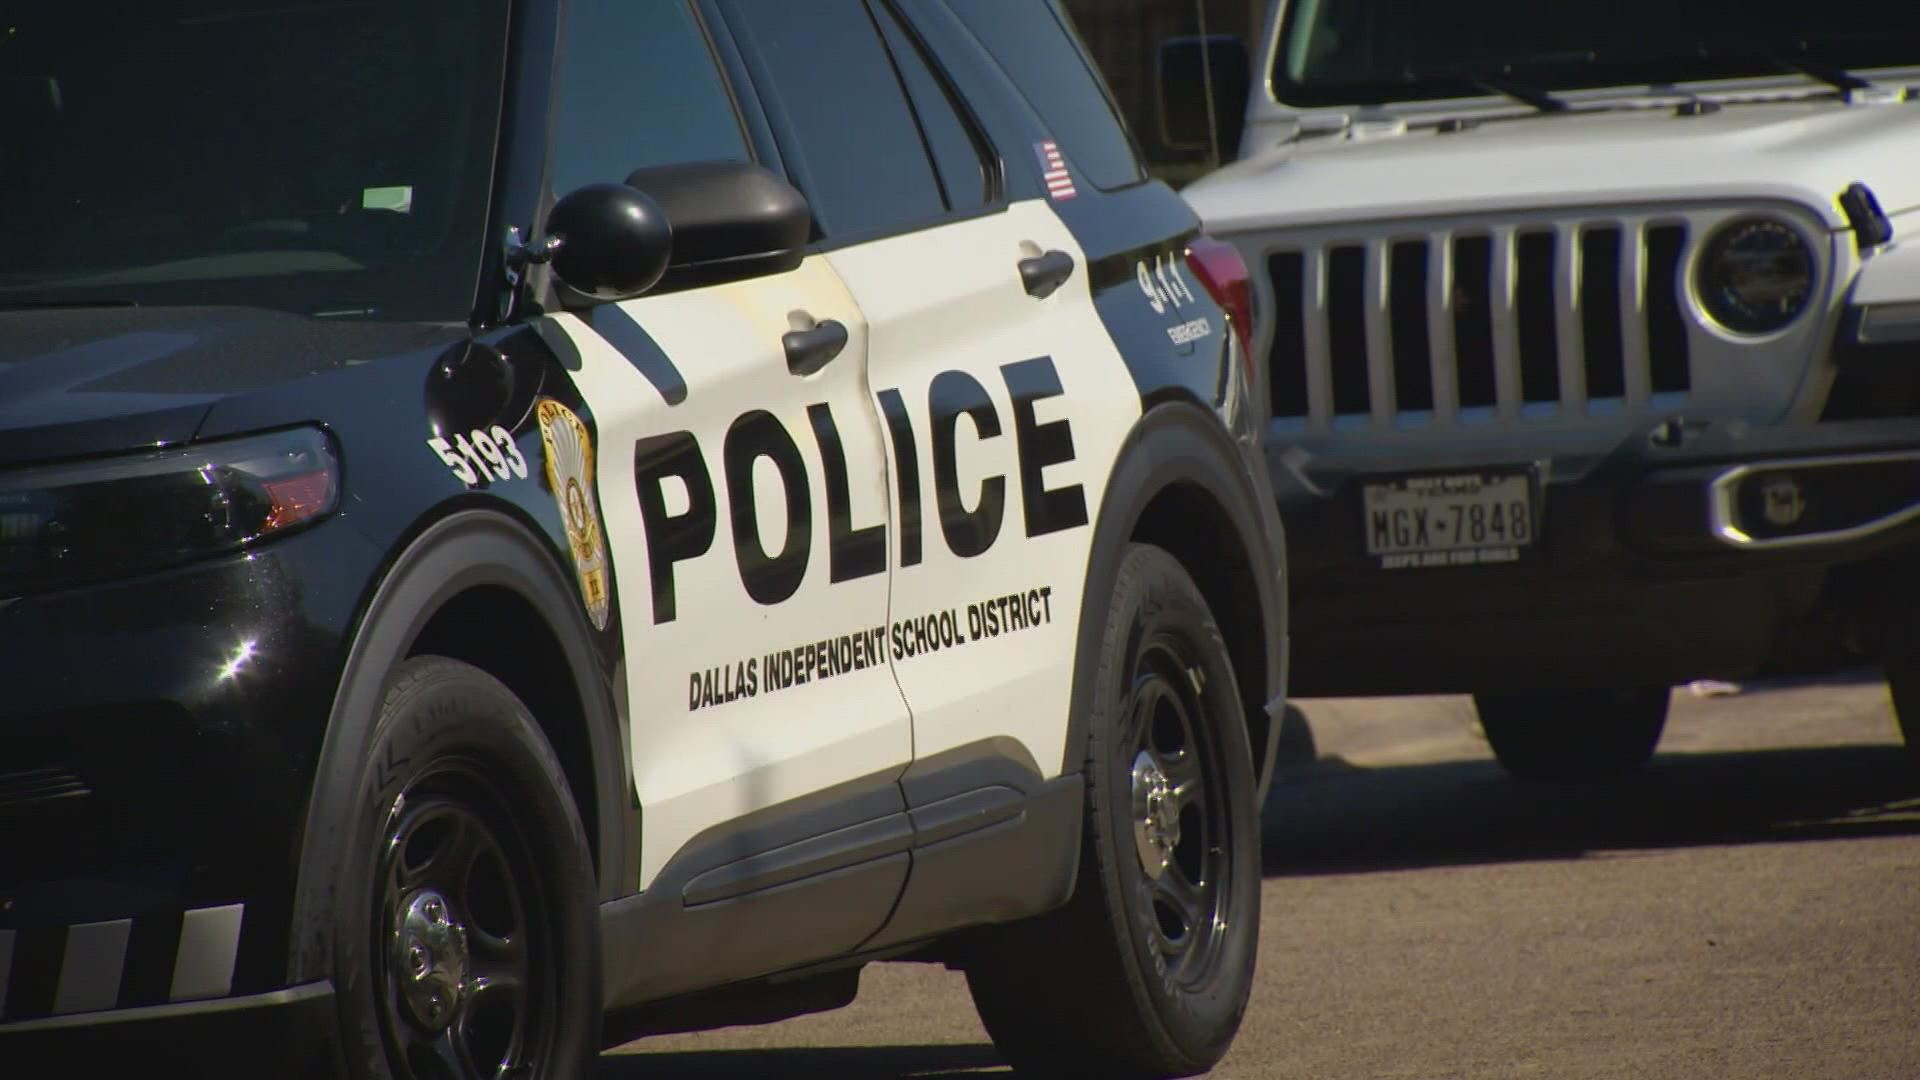 Dallas ISD confirmed that a gun accidentally went off inside John W Carpenter Elementary School before classes began.